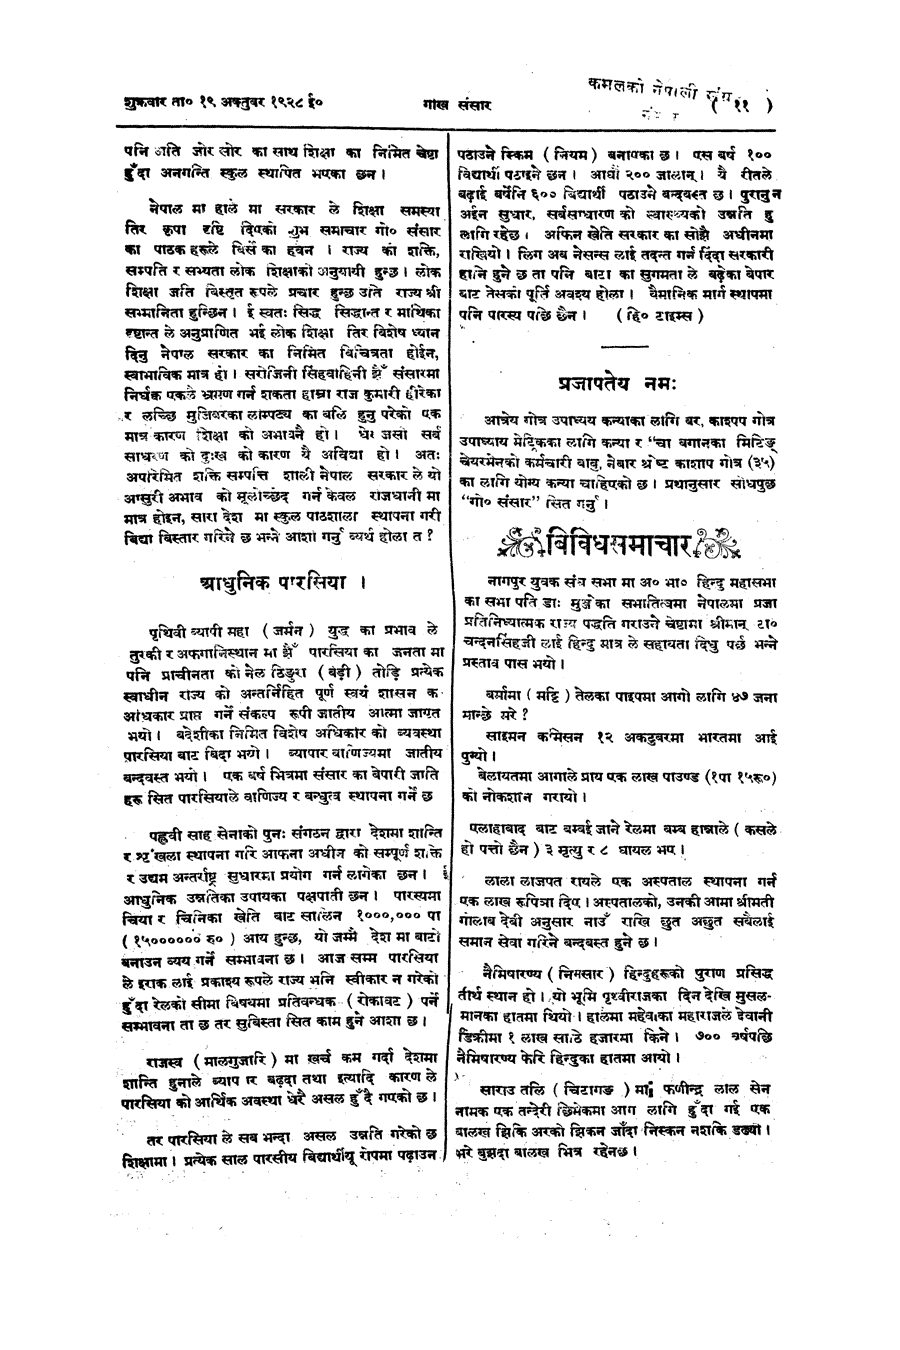 Gorkha Sansar, 19 Oct 1928, page 11